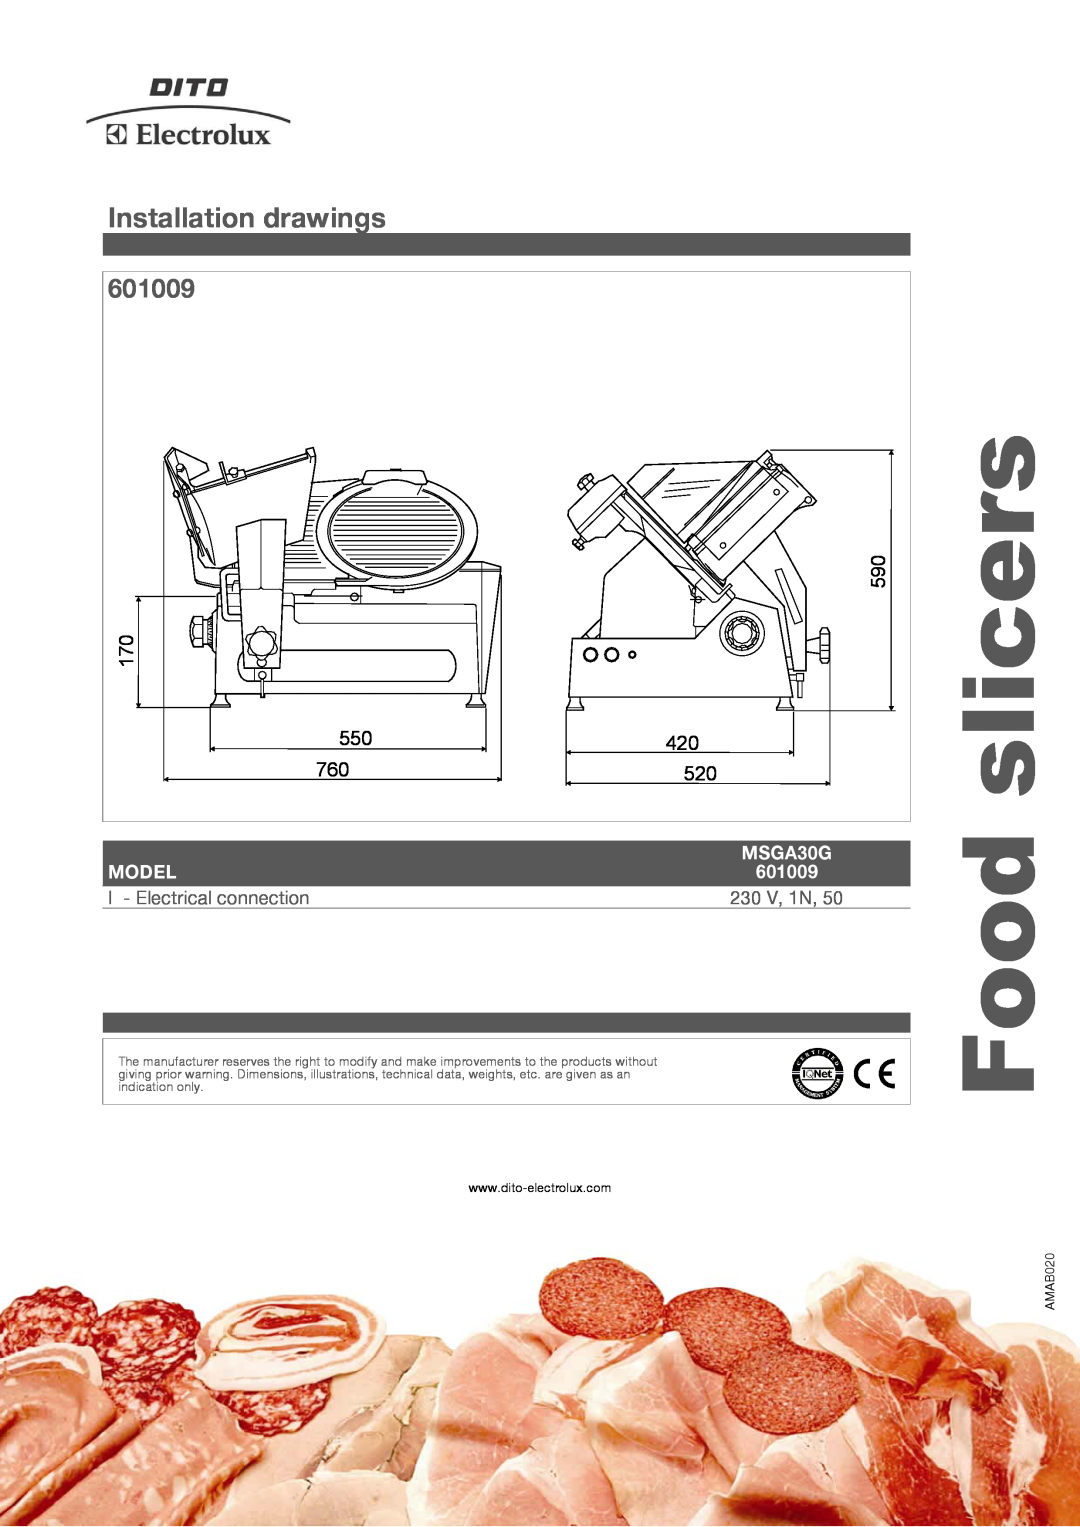 Electrolux MSGA30G Installation drawings, 601009, slicers, Food, Model, I - Electrical connection, 230 V, 1N, AMAB020 